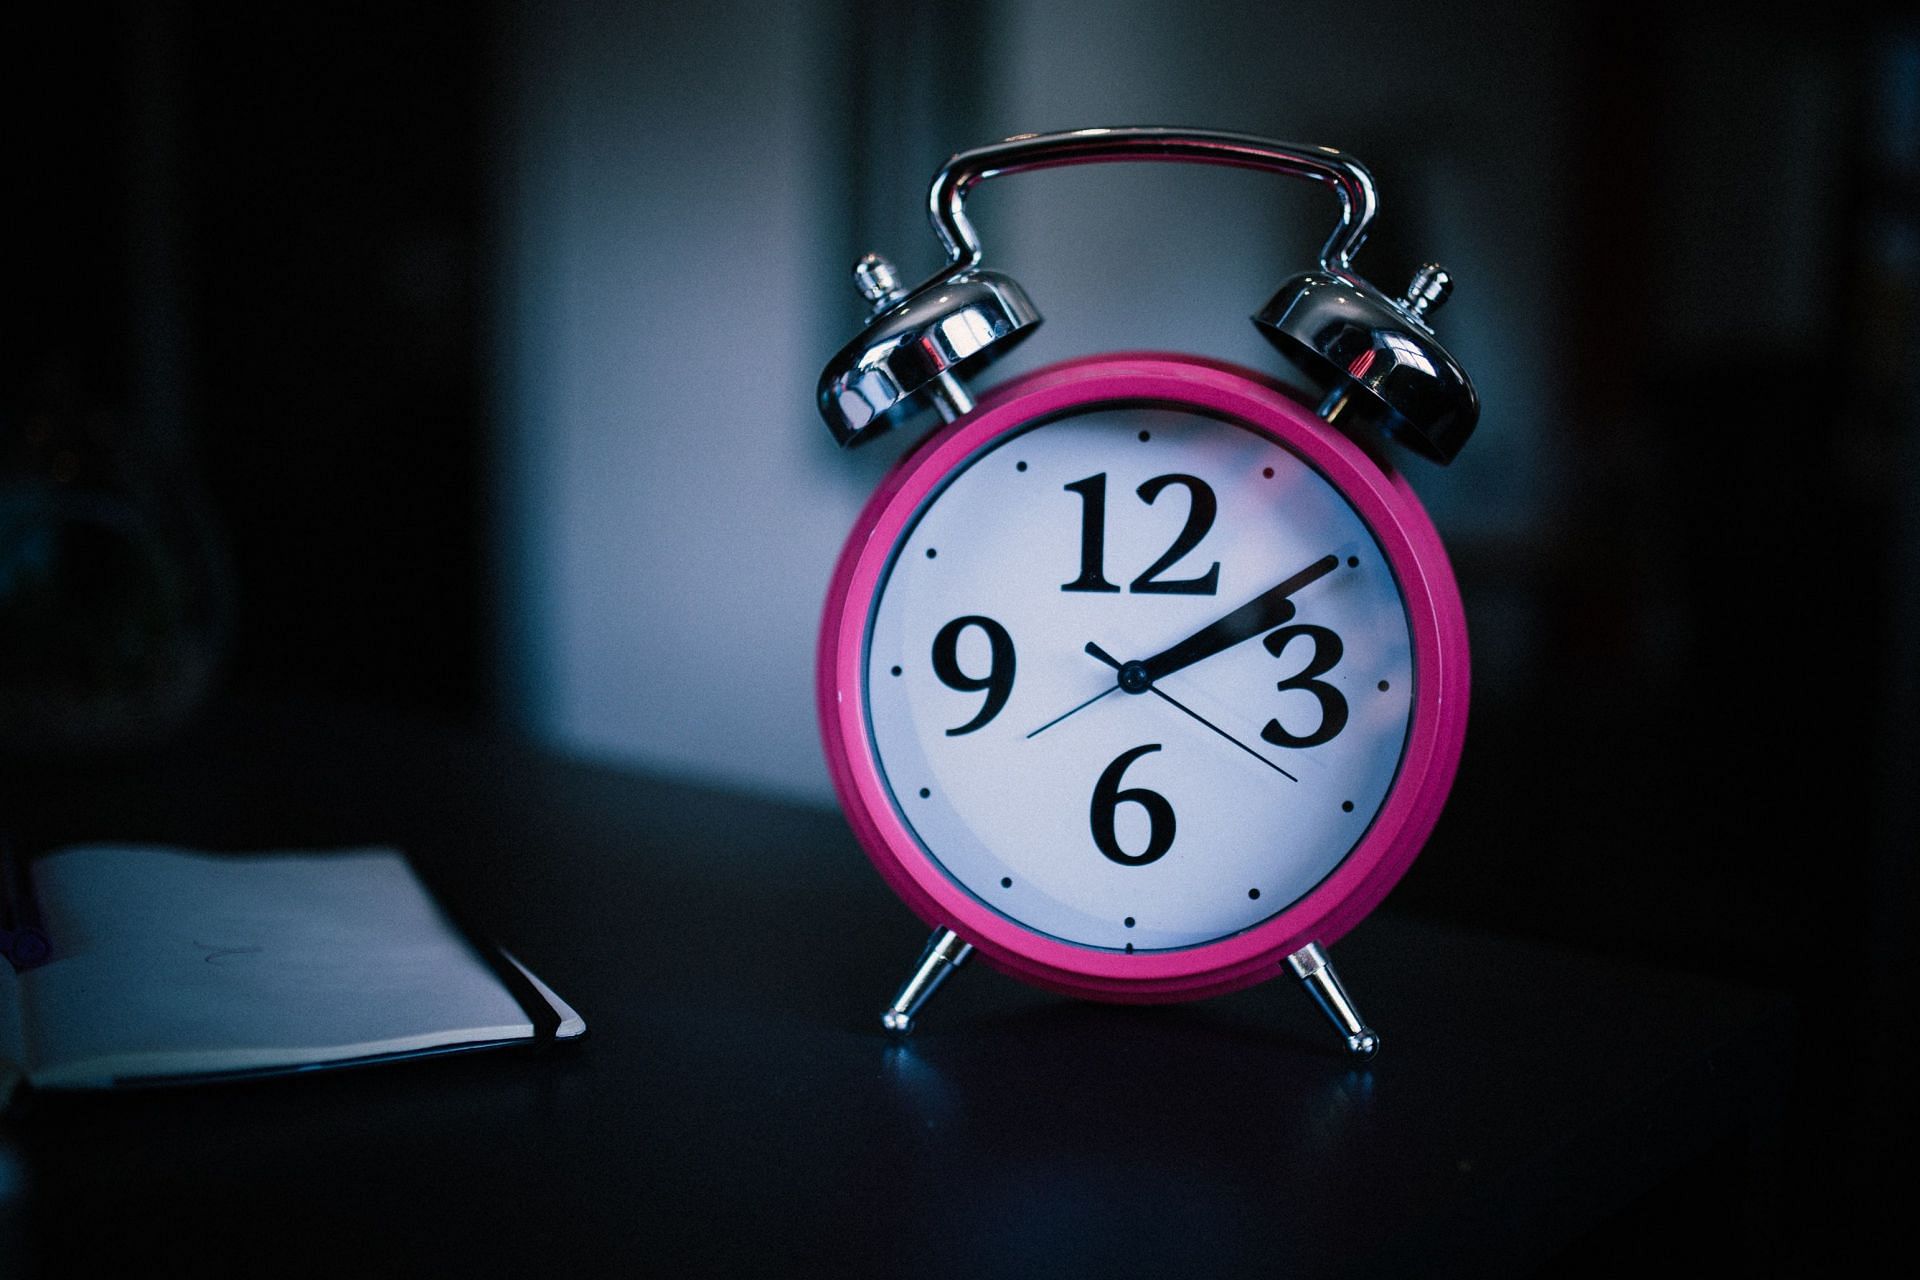 Track your progress, and prioritize your sleep. (Image via Unsplash/mpho mojapelo)